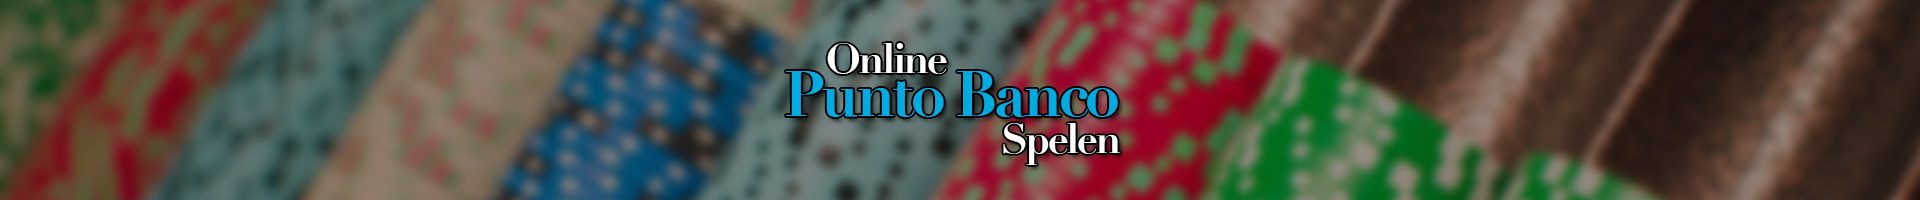 Online Punto Banco Spelen